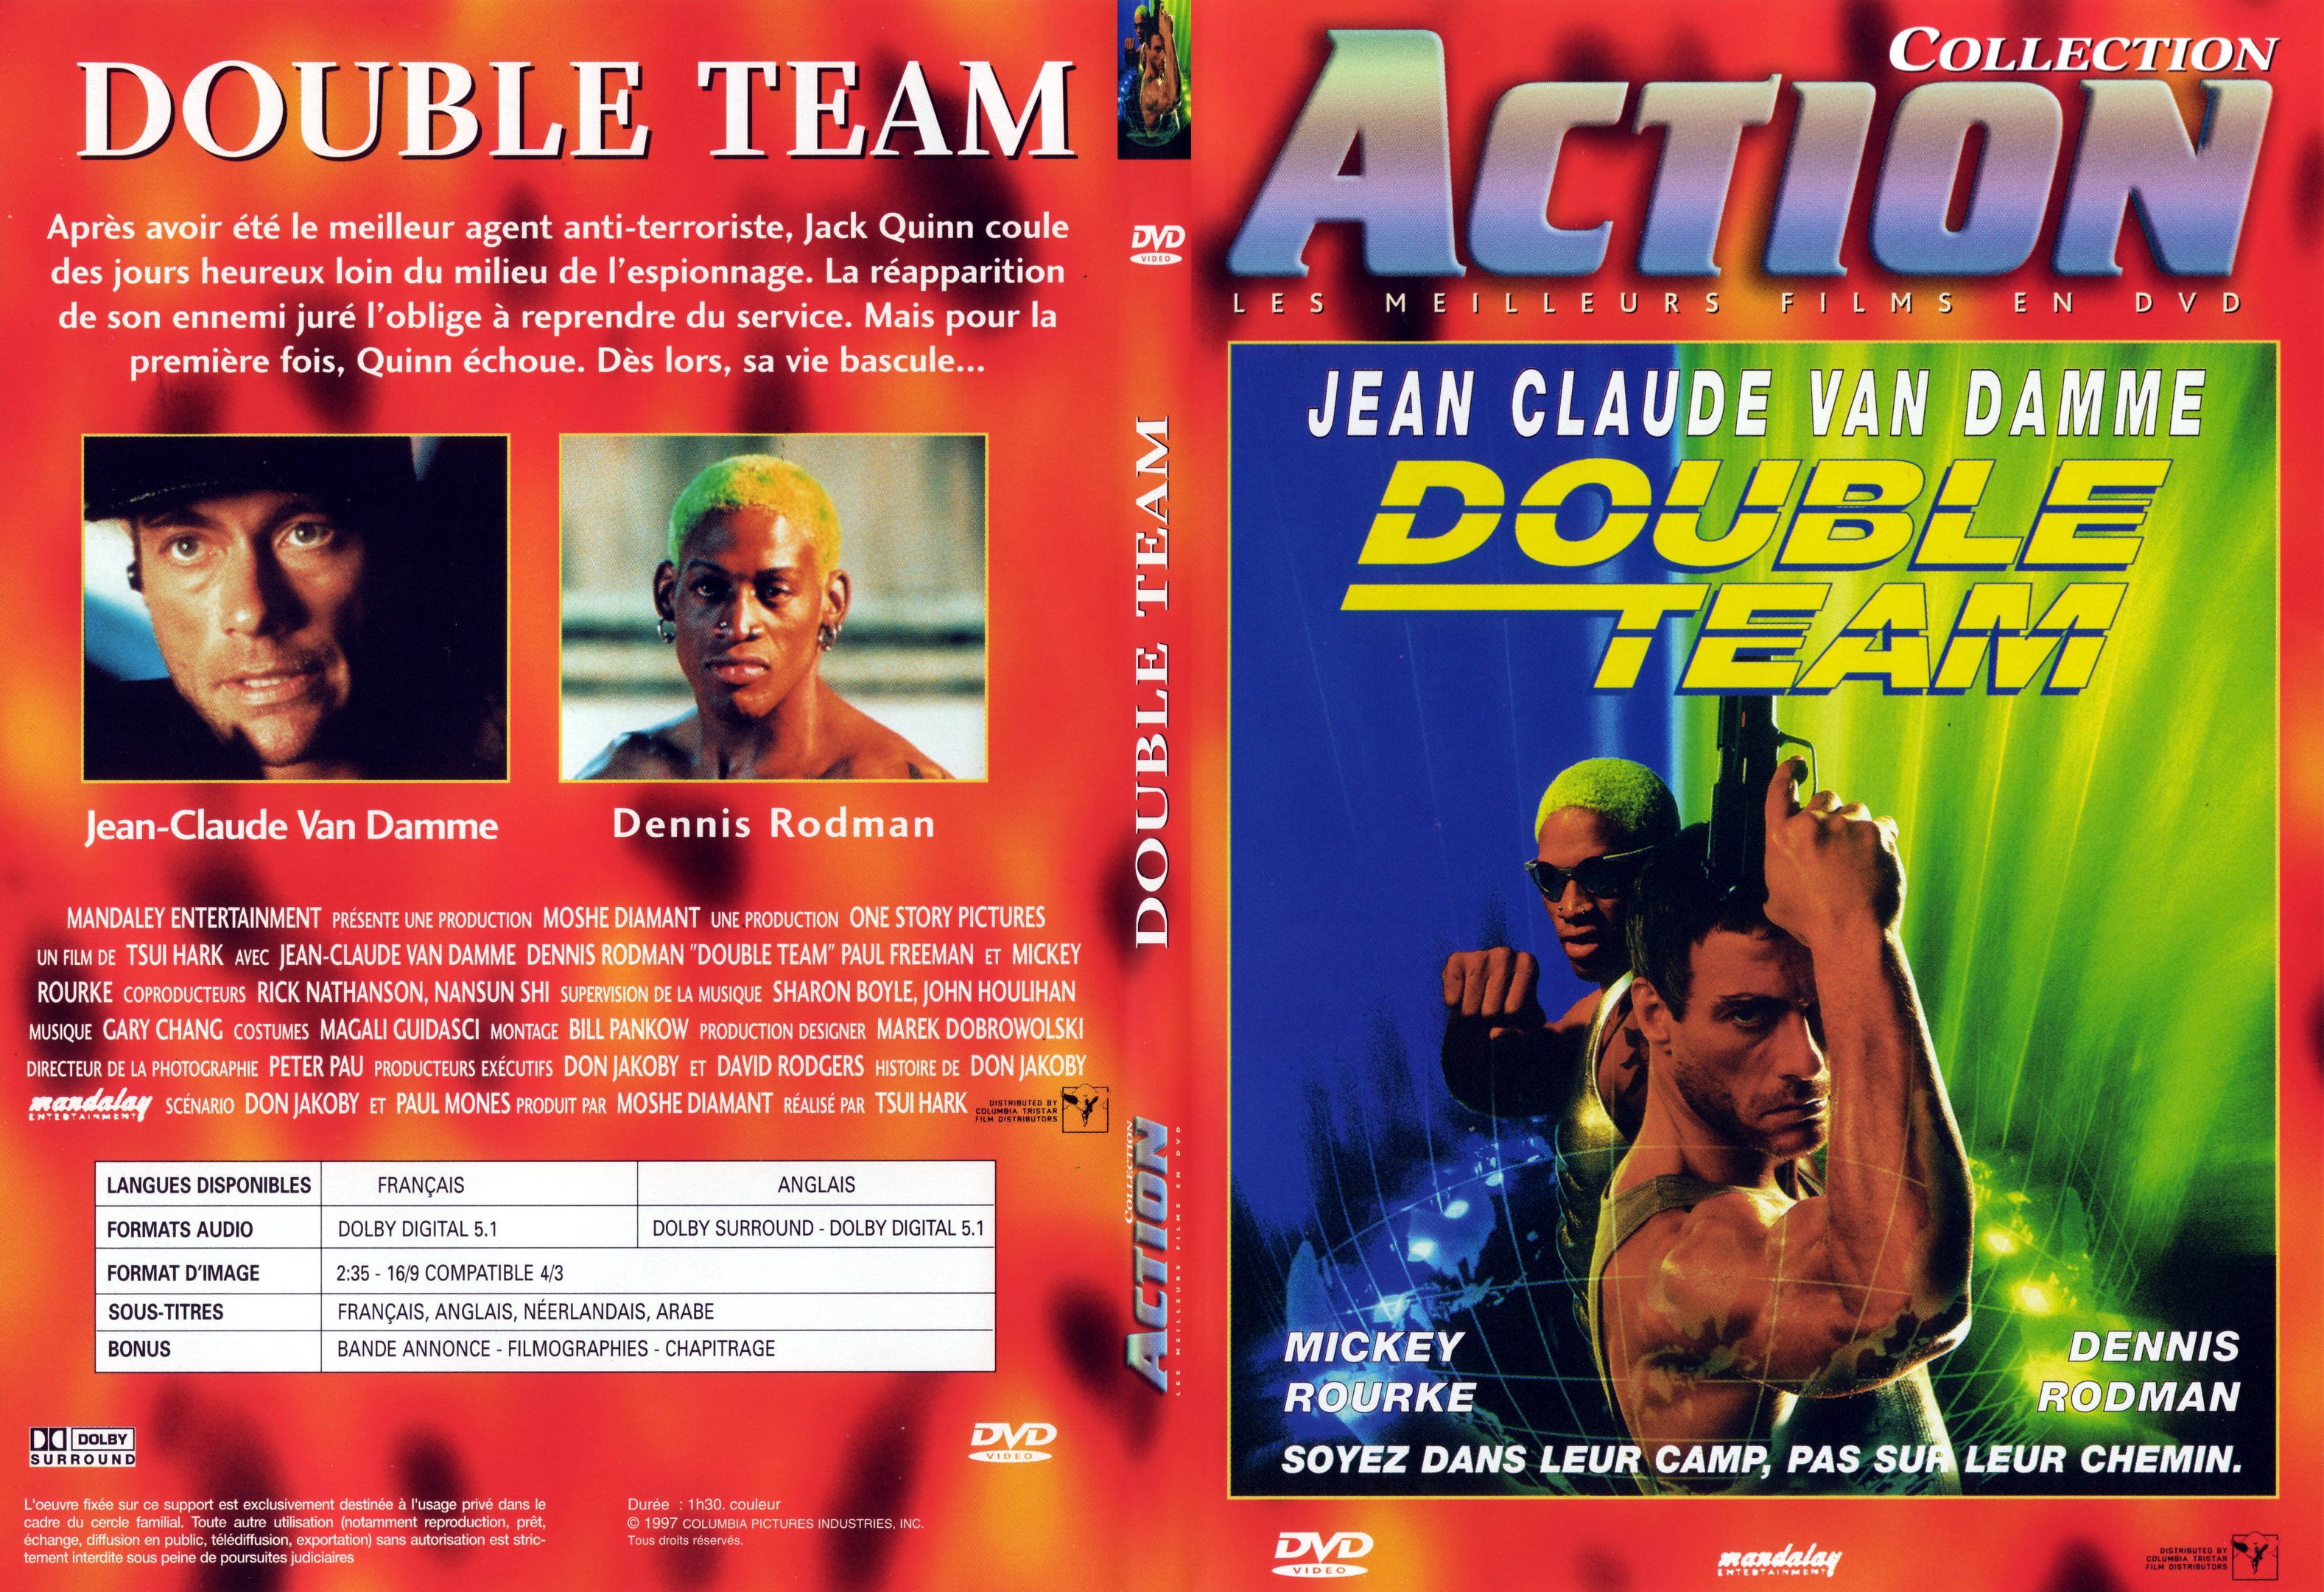 Jaquette DVD Double team - SLIM v2